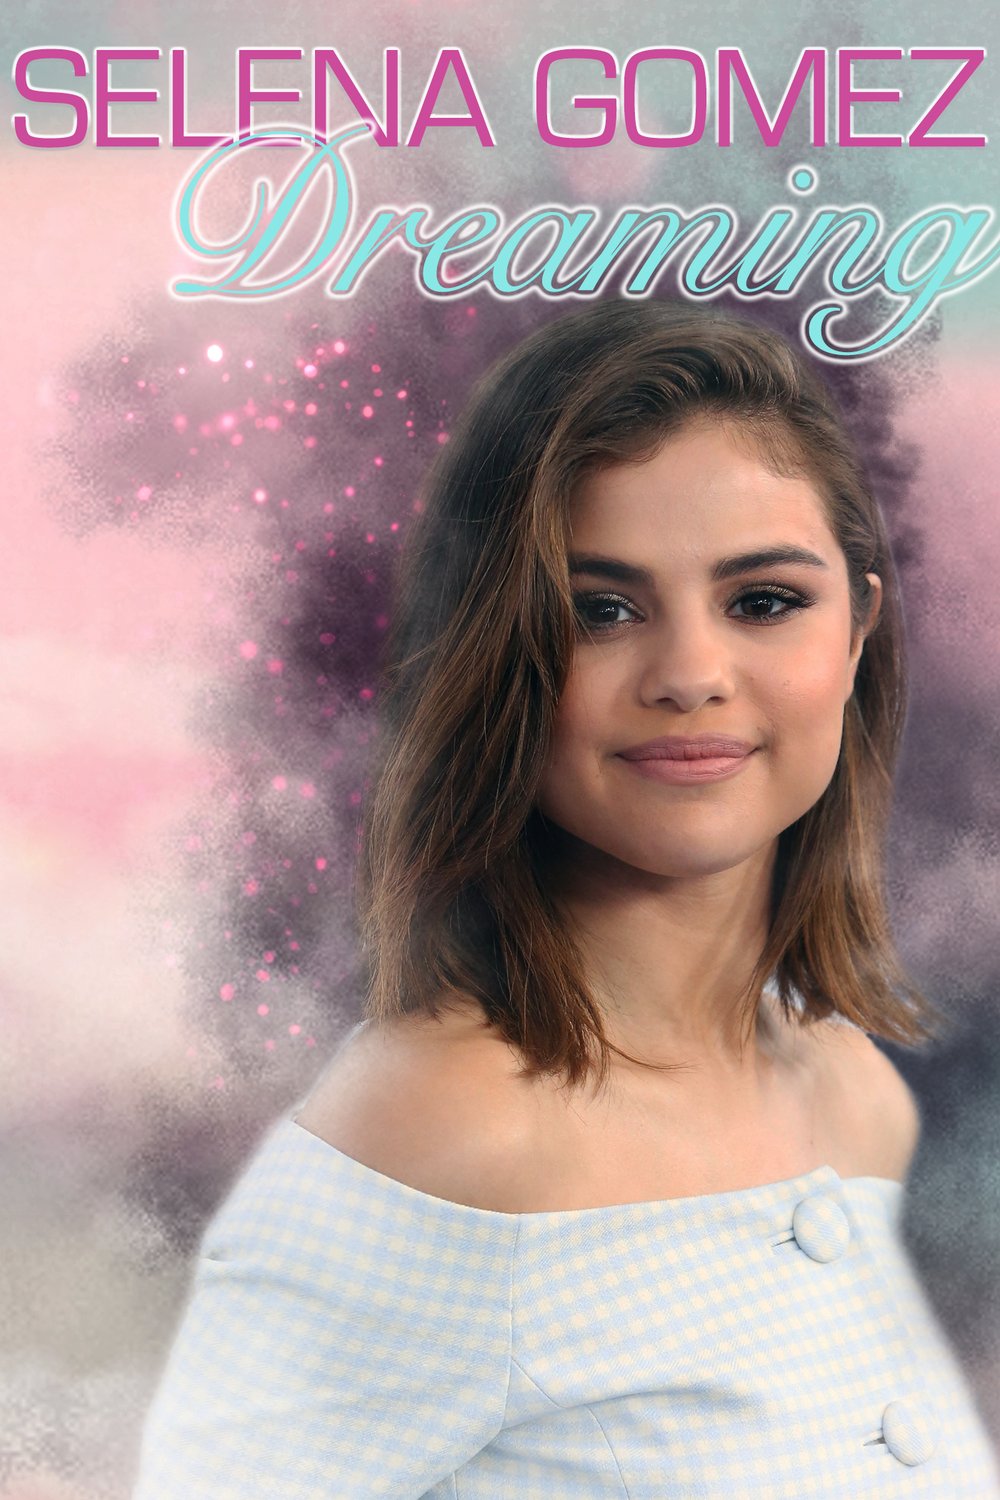 L'affiche du film Selena Gomez: Dreaming